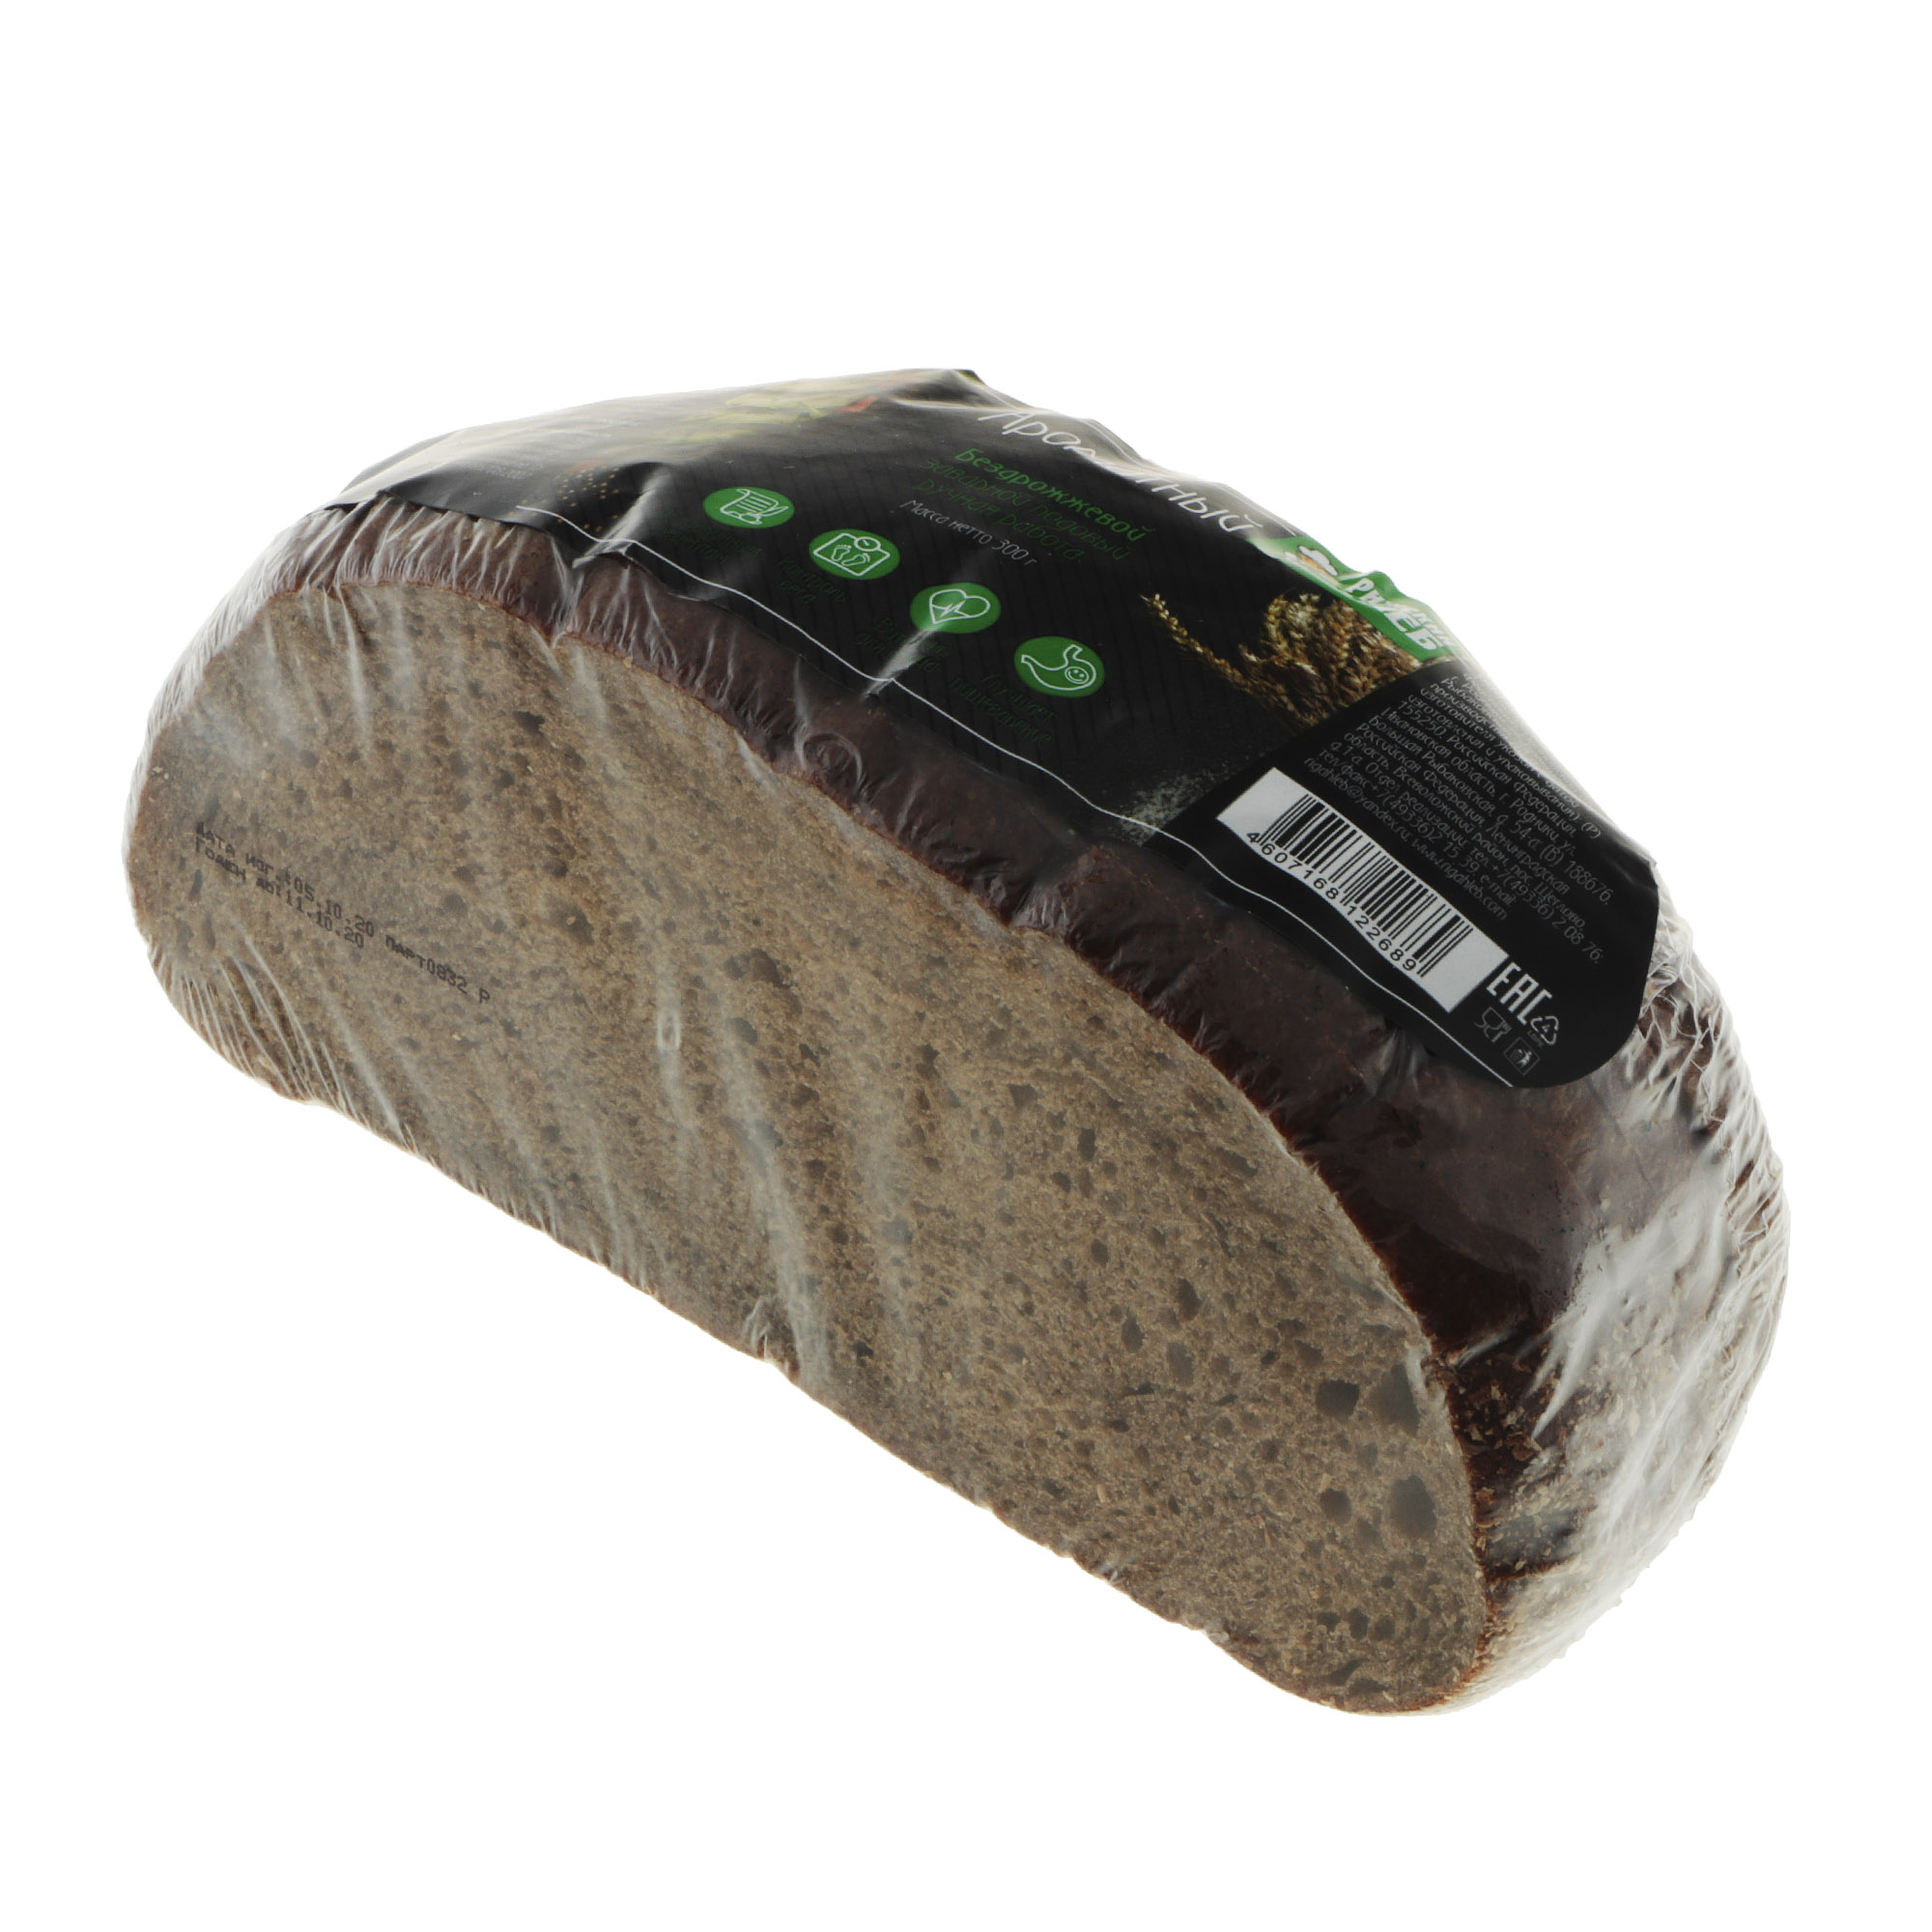 Хлеб Рижский хлеб ароматный 300 г хлеб рижский хлеб ароматный 300 г